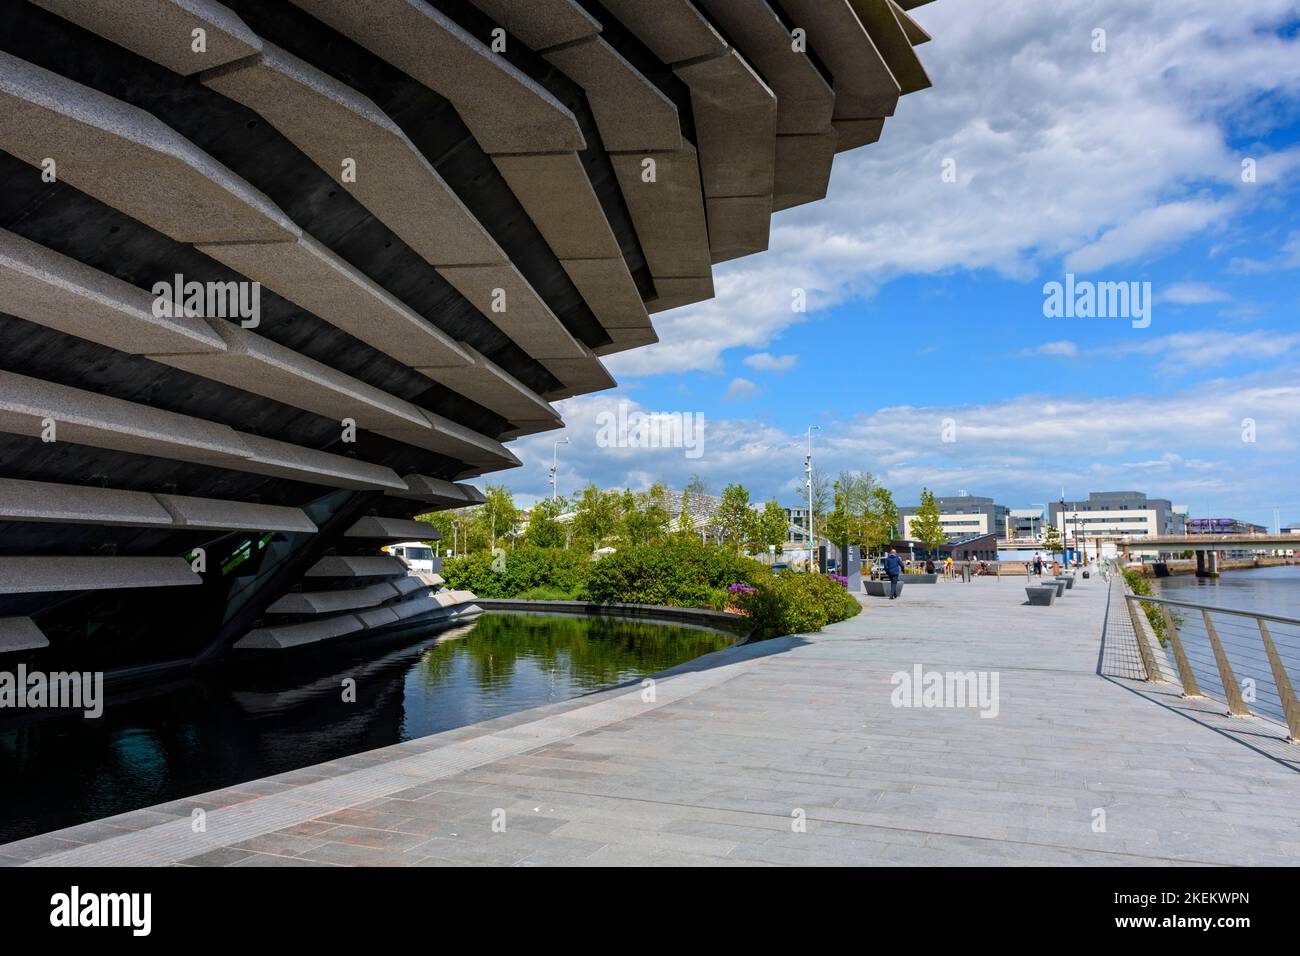 Das V&A Design Museum, Riverside Esplanade, Dundee, Schottland, Großbritannien. Architekt Kengo Kuma. Eröffnet Im September 2018. Stockfoto